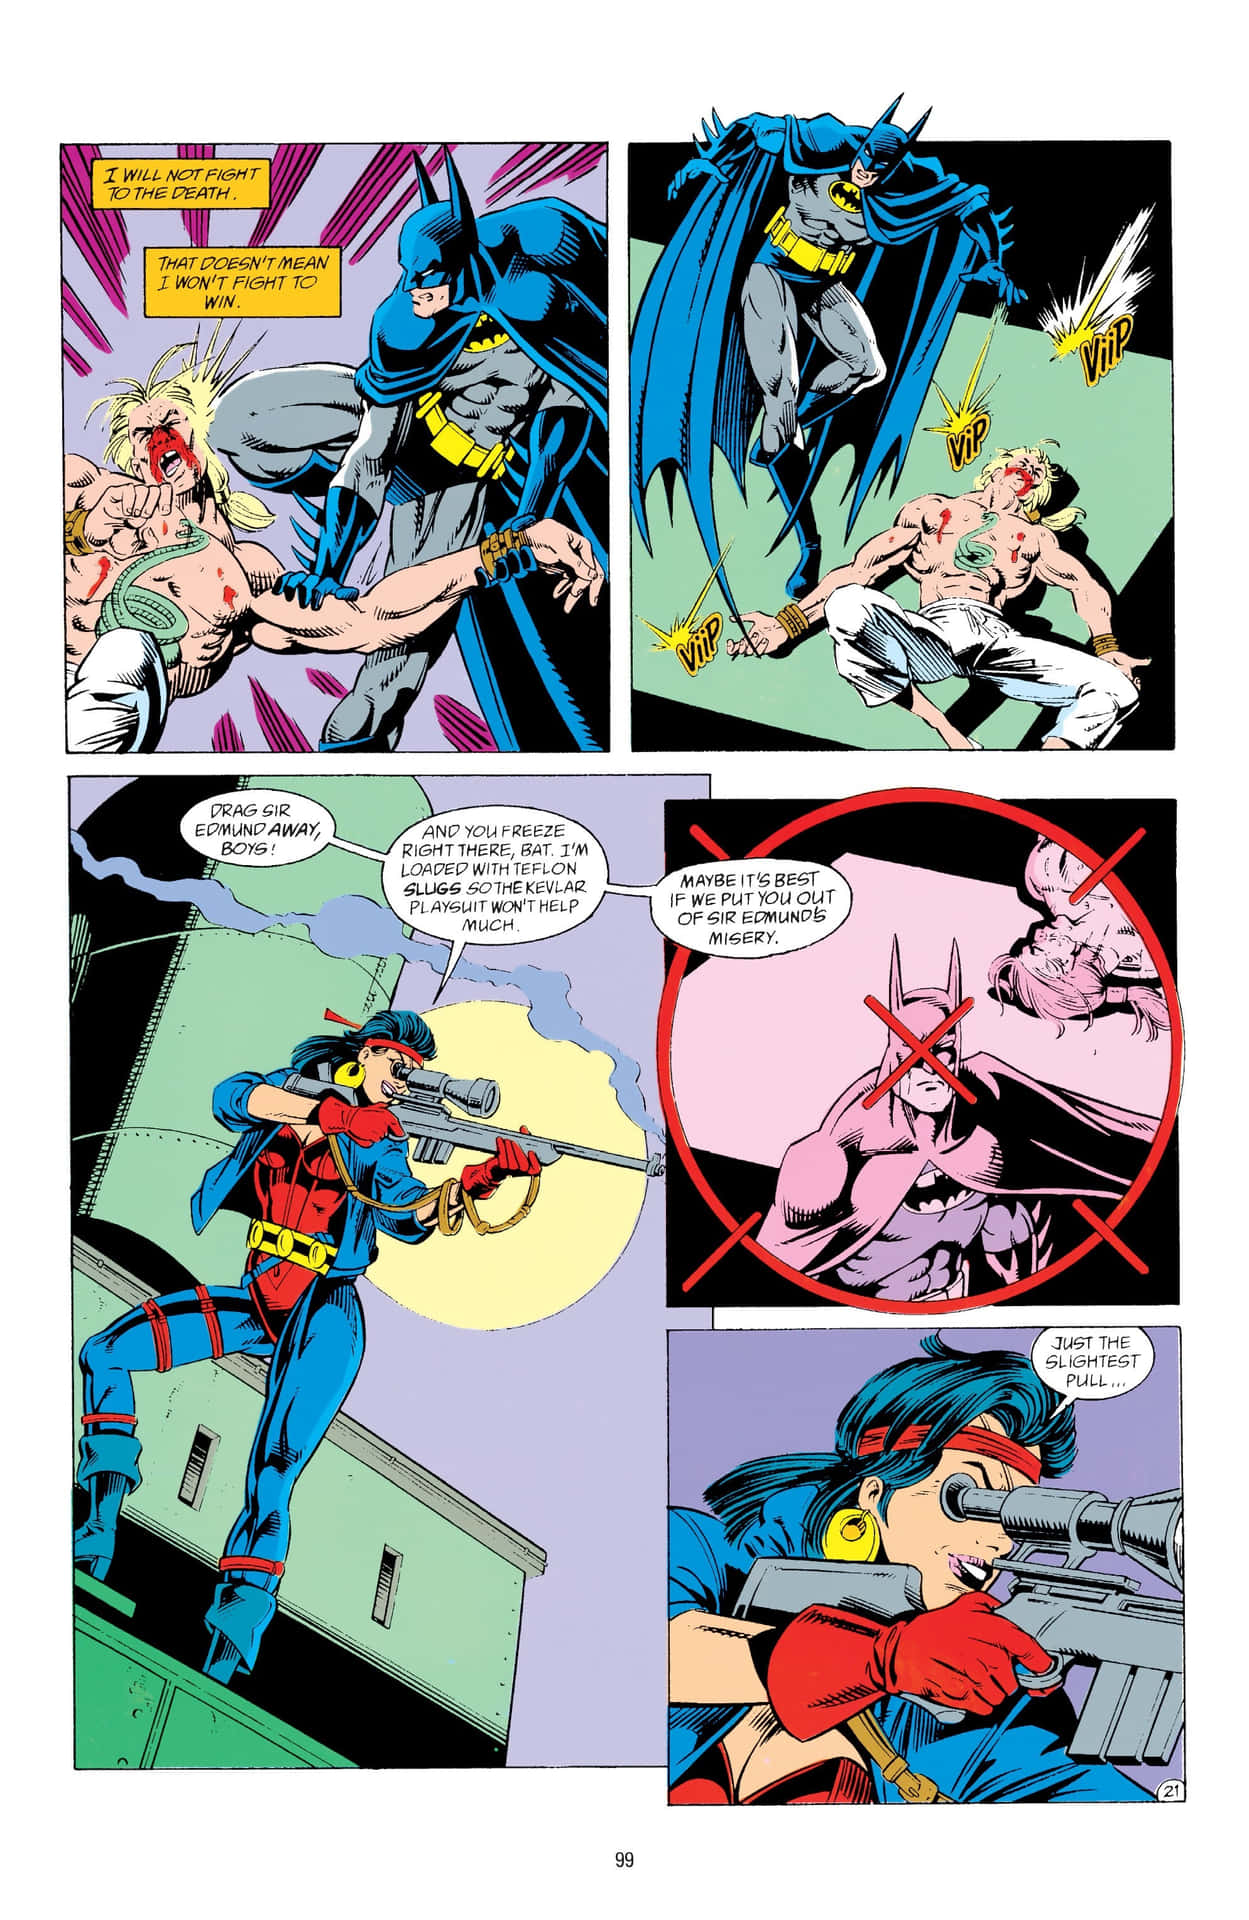 The Dark Knight protects Gotham City Wallpaper